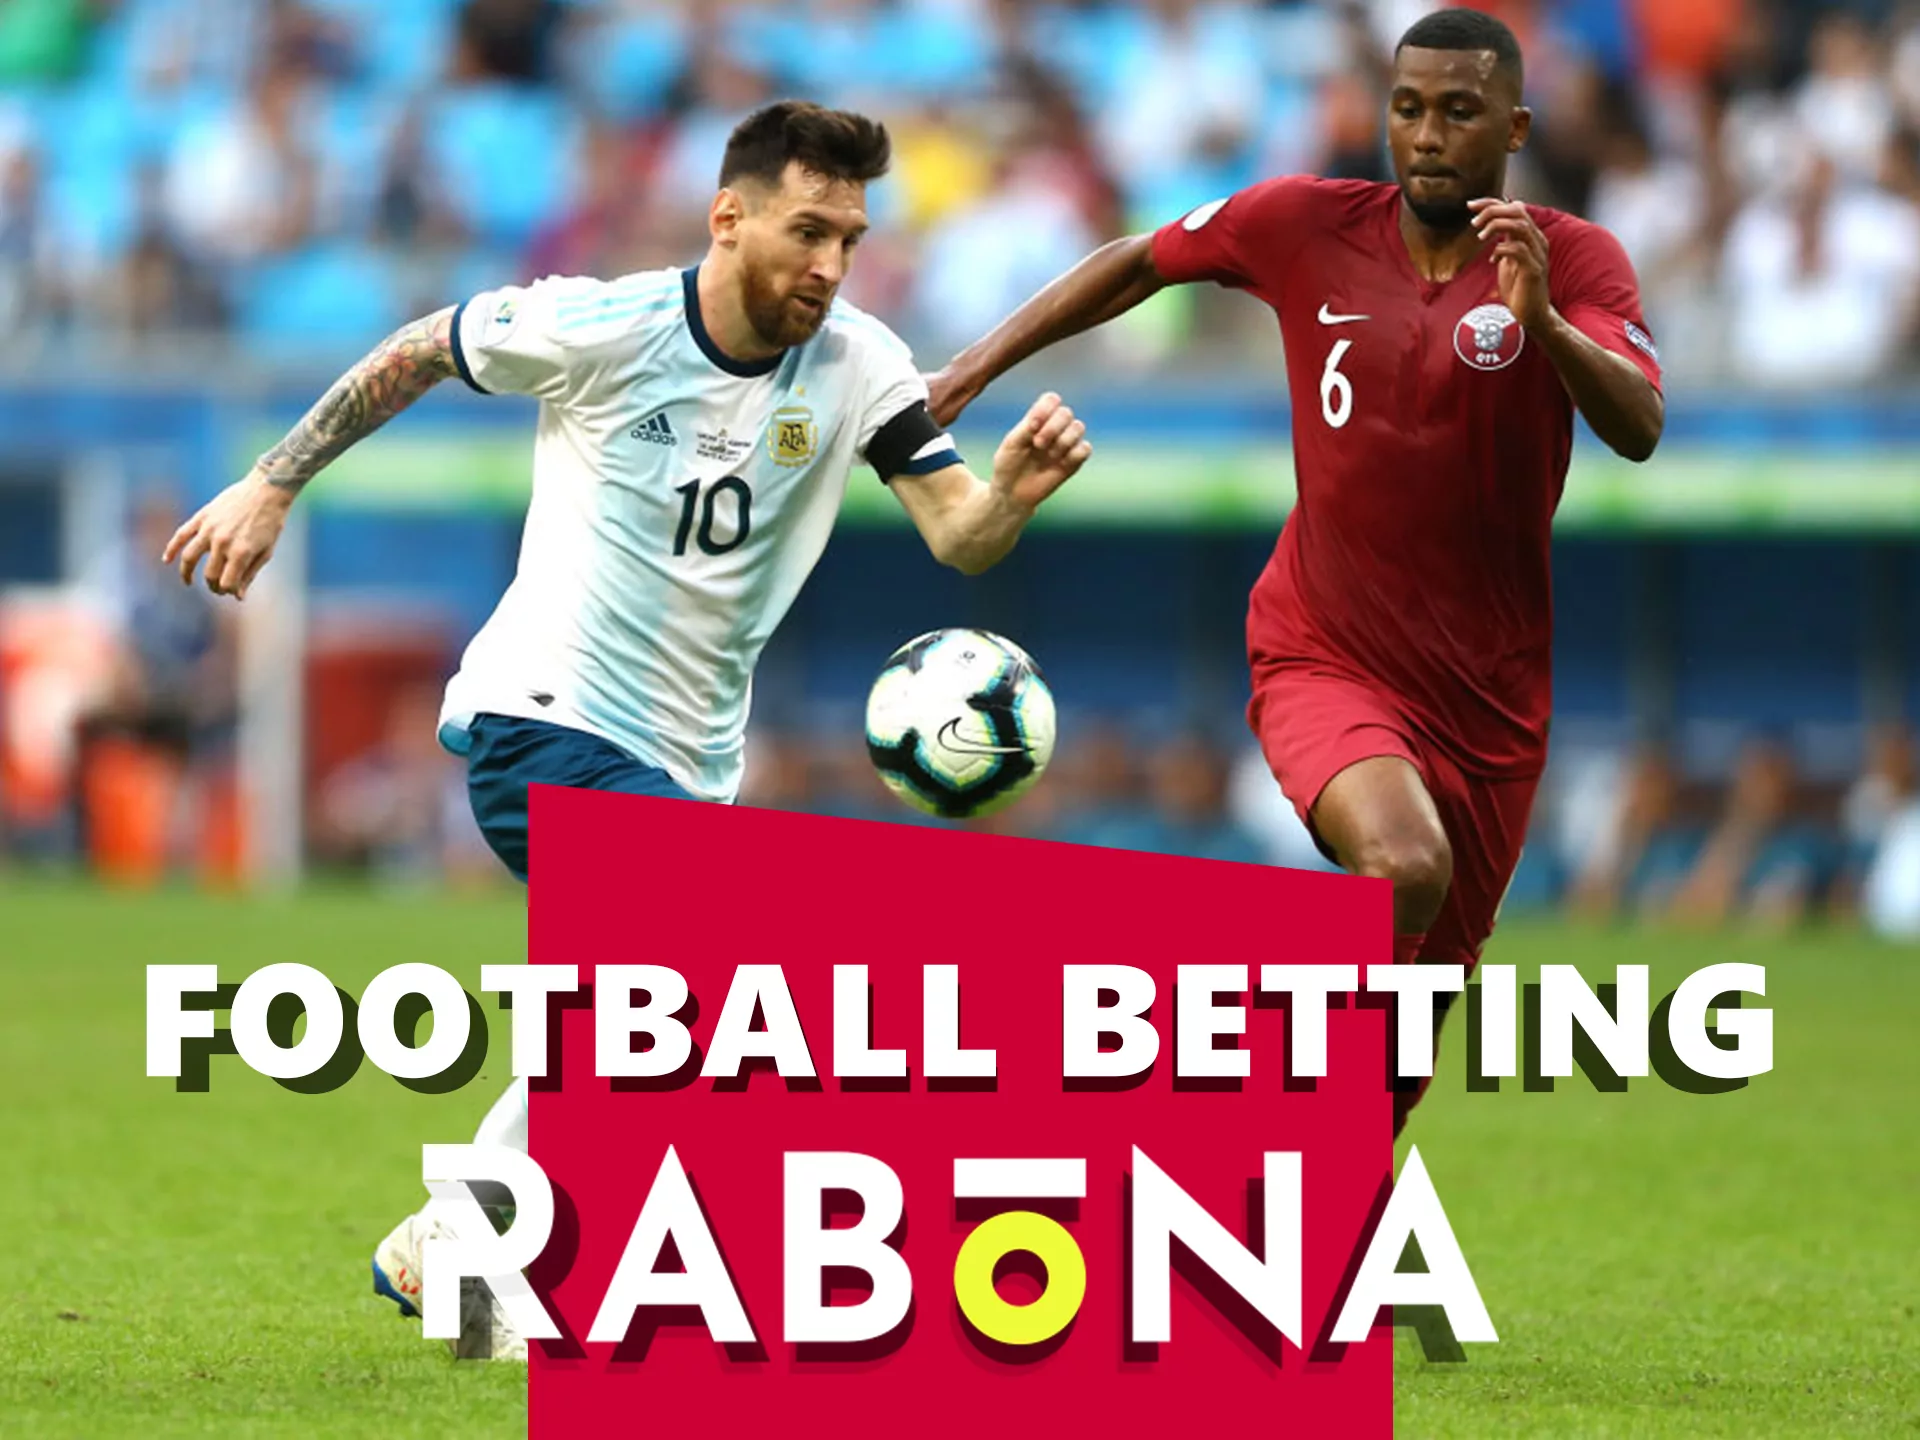 Football betting on Rabona.